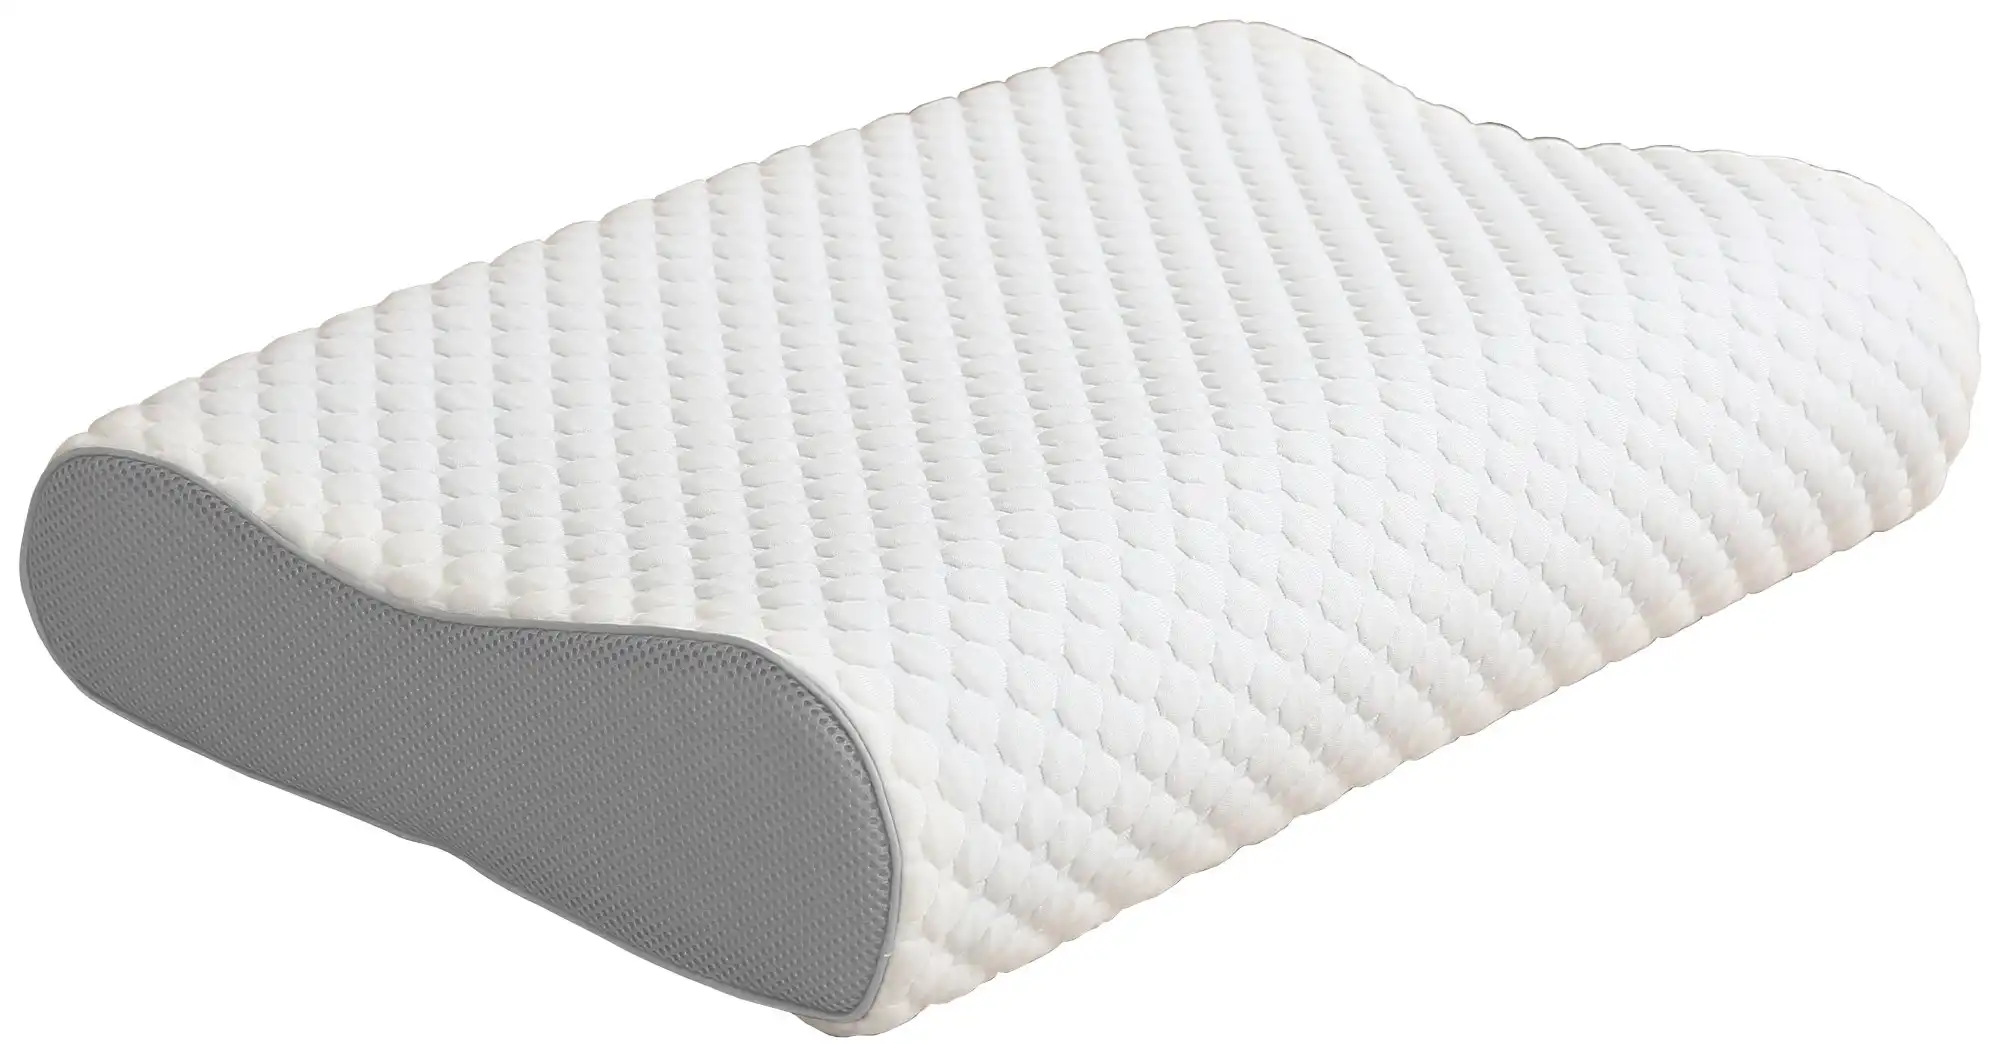 Sound Sleep Memory Foam Contour Pillow 60x40cm